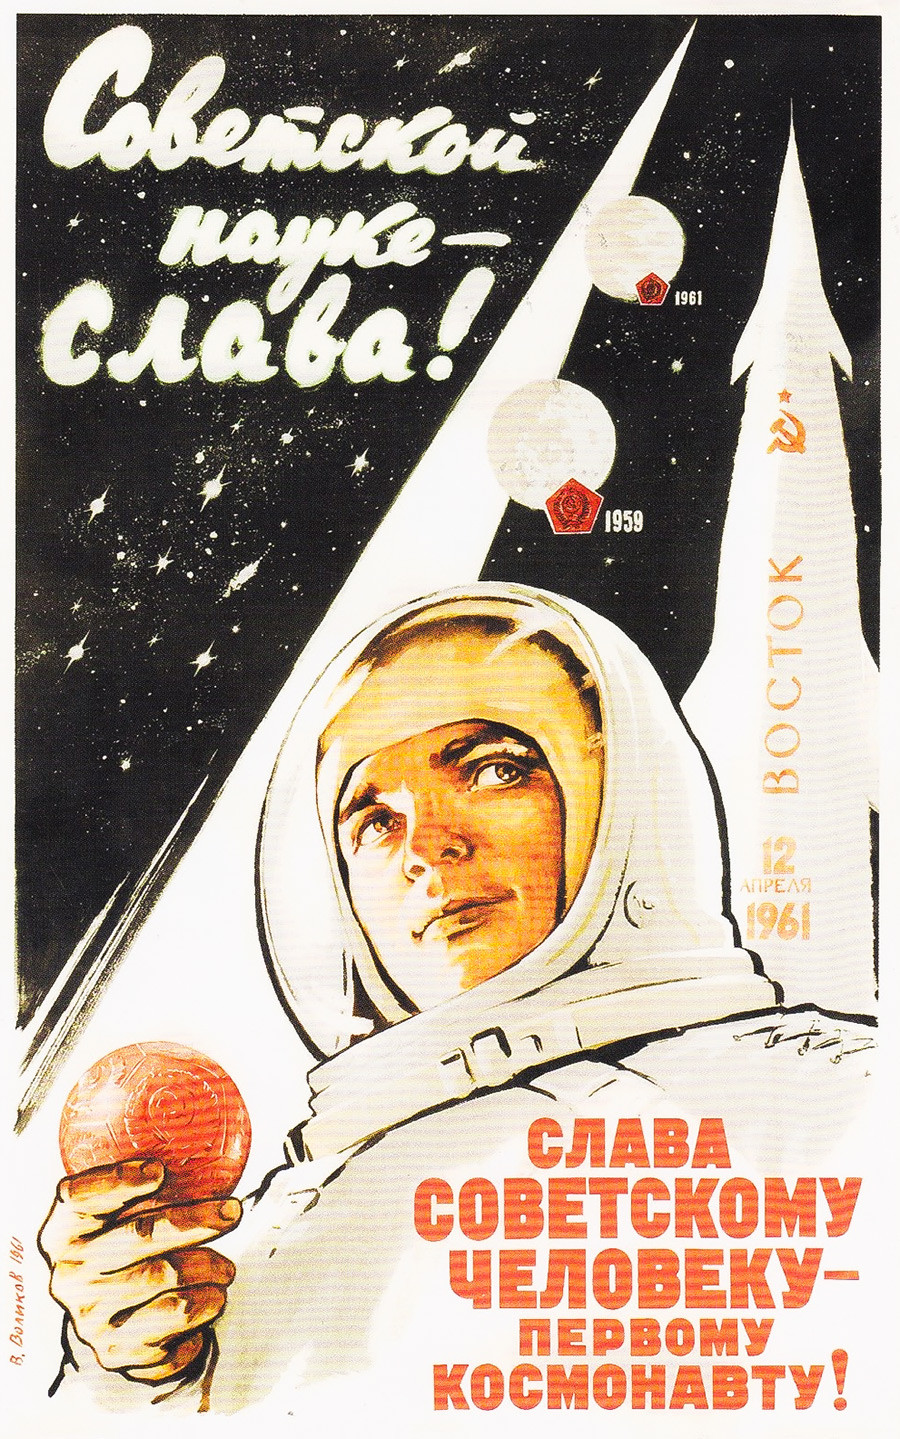 Kejayaan bagi dunia sains Soviet! Kejayaan bagi orang Soviet, kosmonaut pertama!